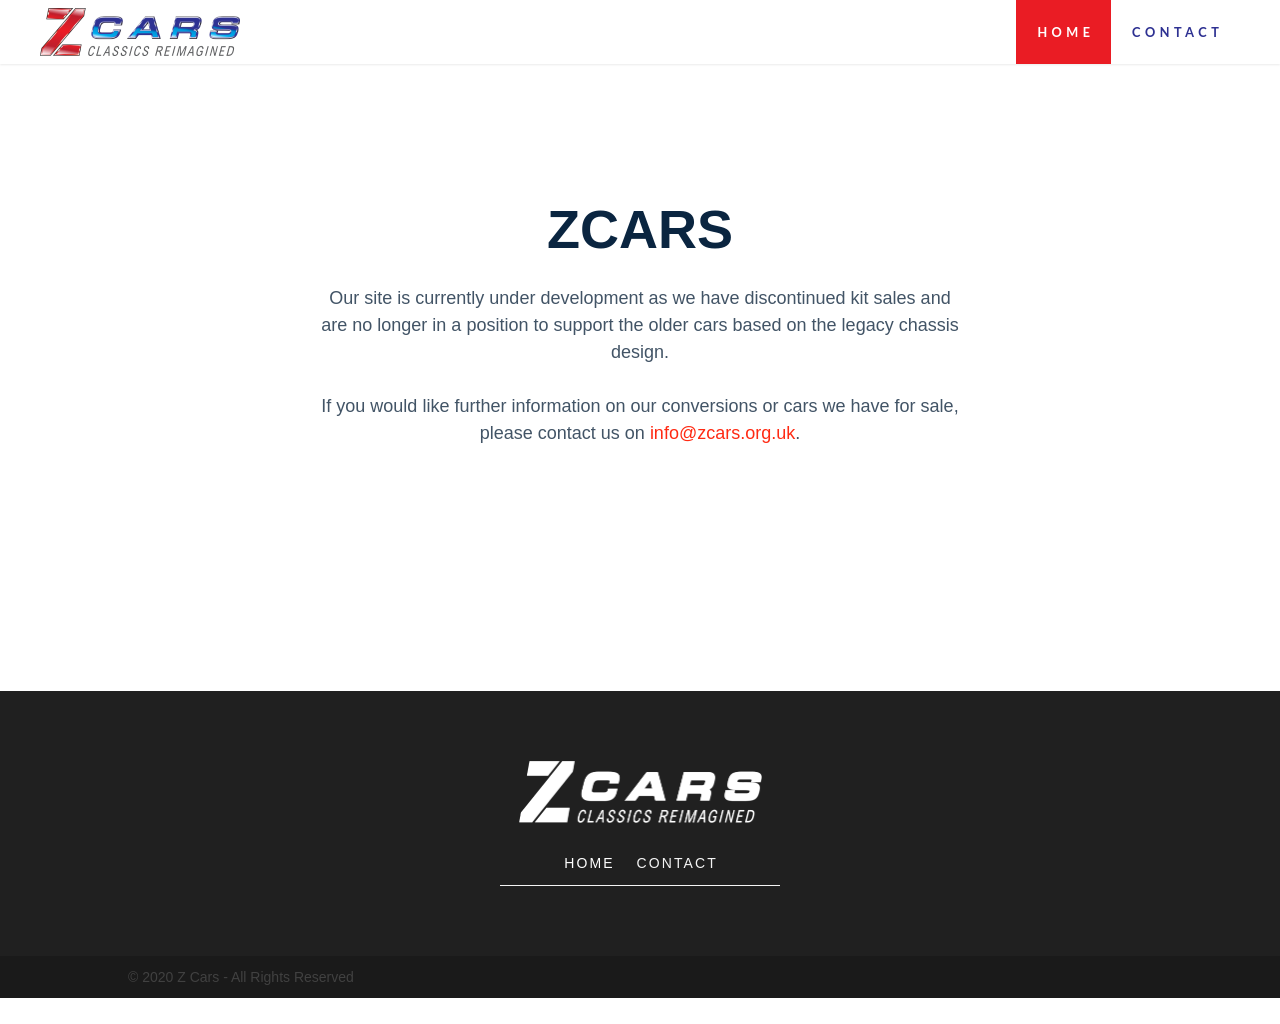 zcars.org.uk